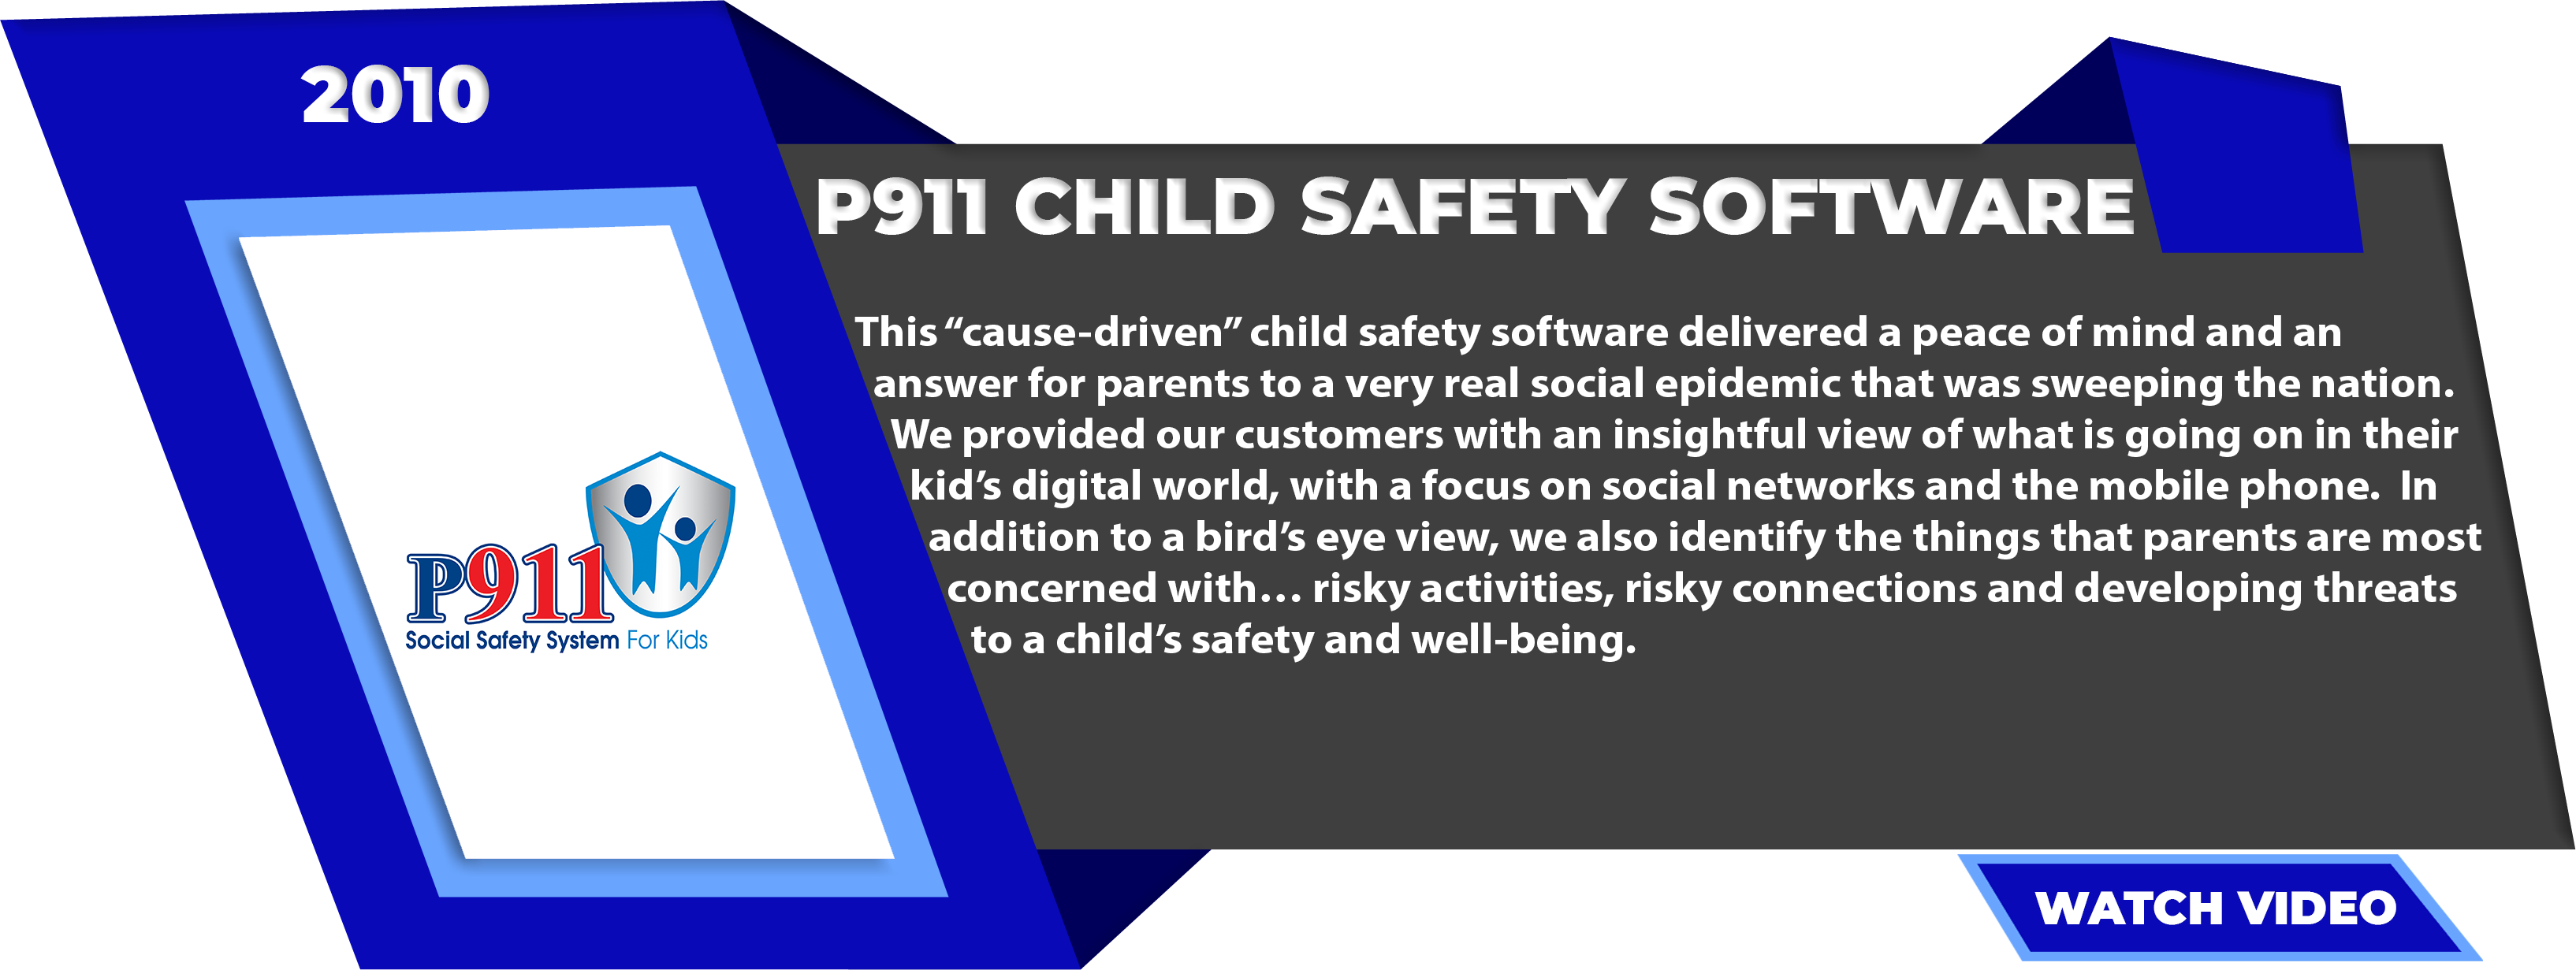 P911-Child-Safety-Software-2010-2014-1